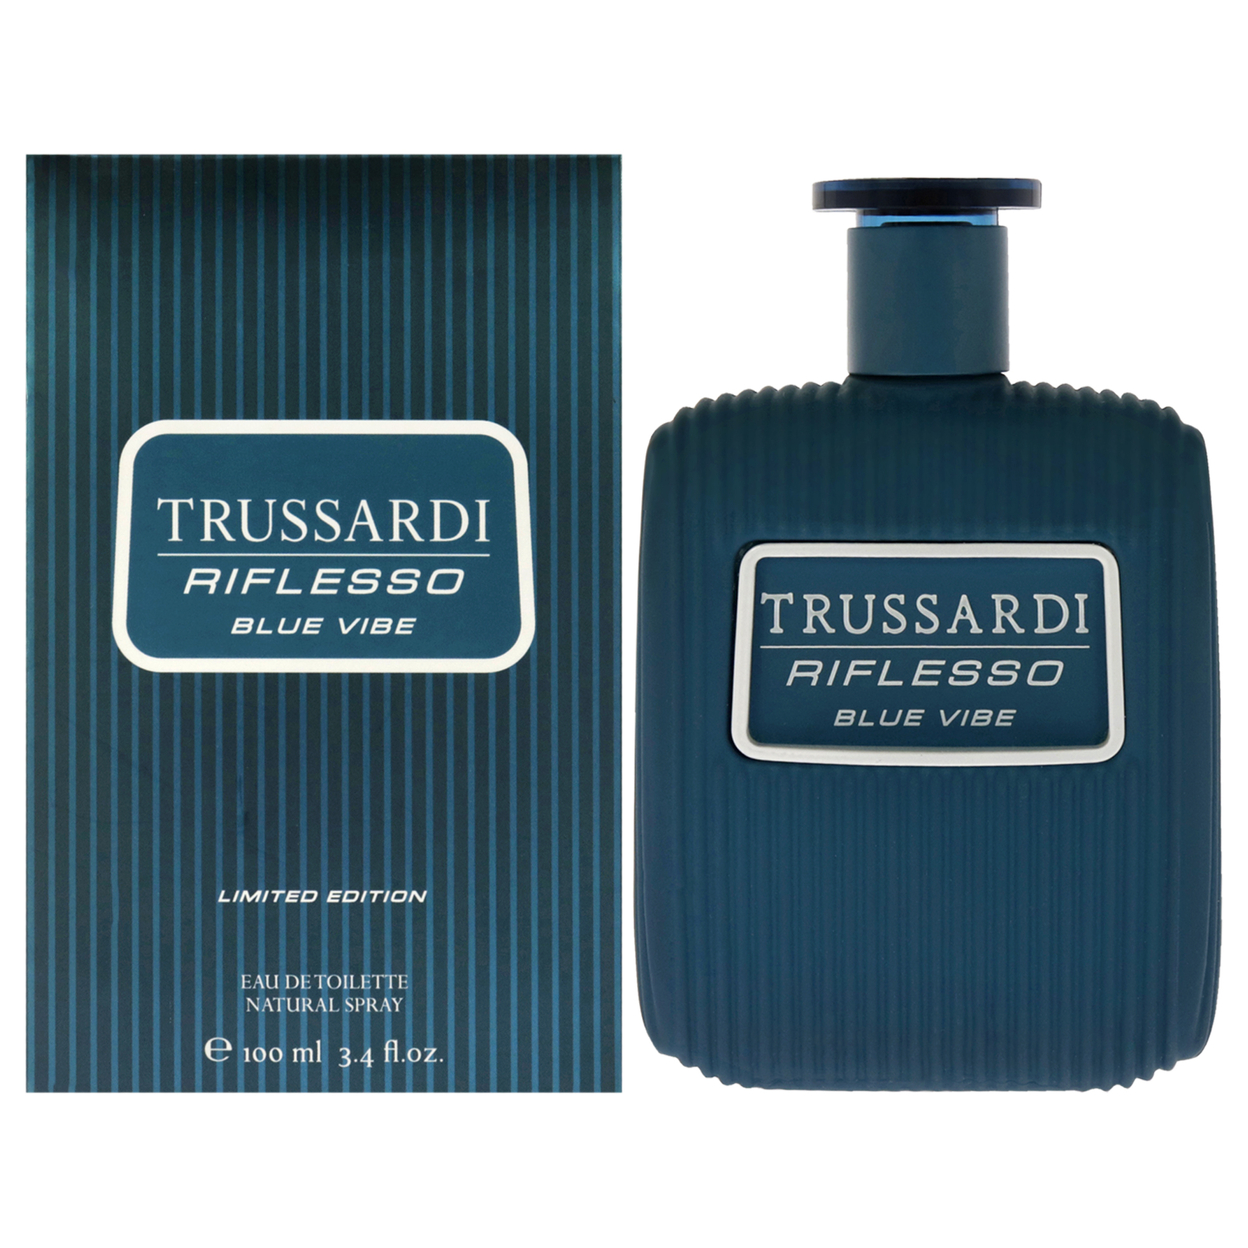 Trussardi Riflesso Blue Vibe Limited Edition EDT Spray 3.4 Oz